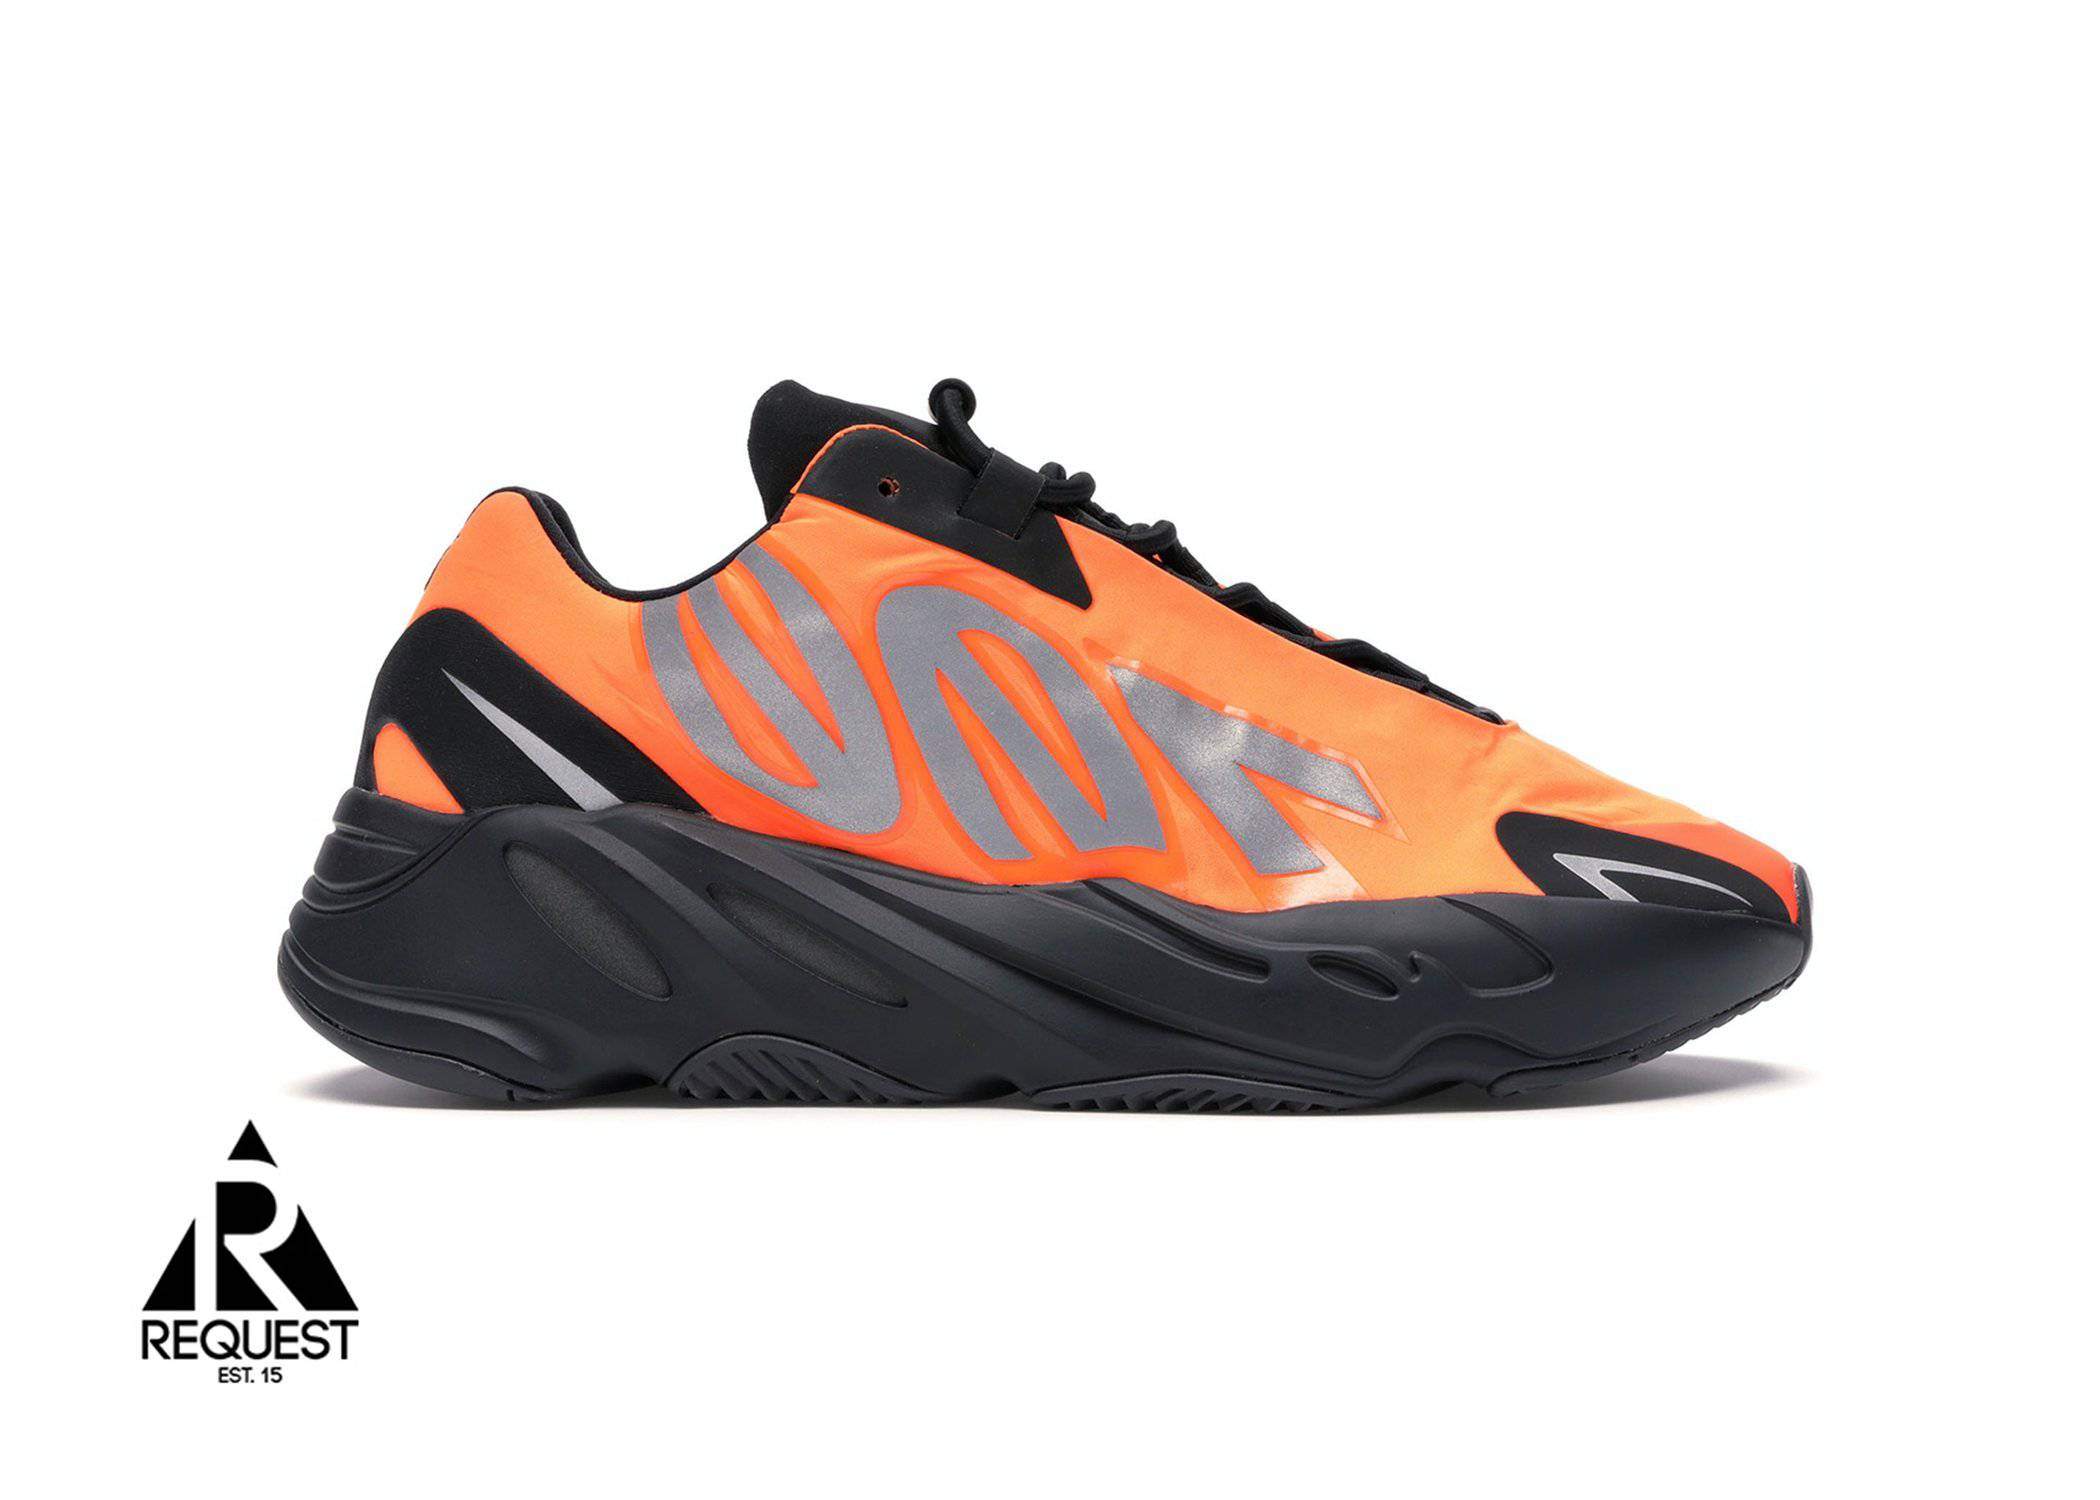 Adidas Yeezy Boost 700 MNVN “Orange”